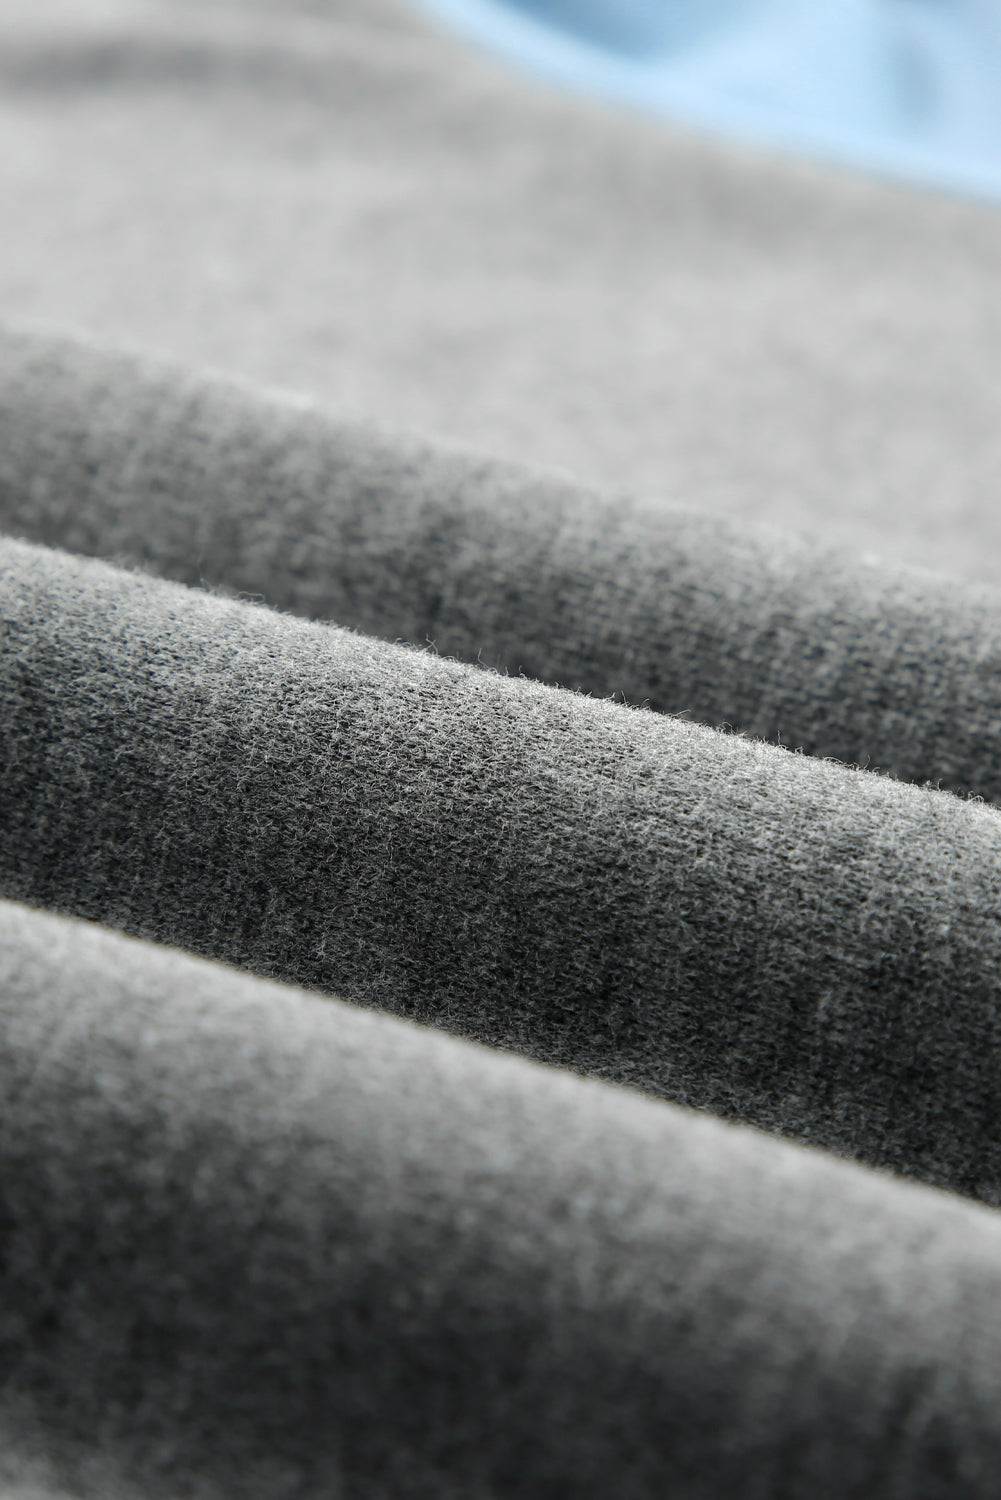 Gray Colorblock Long Sleeve Pullover Sweatshirt